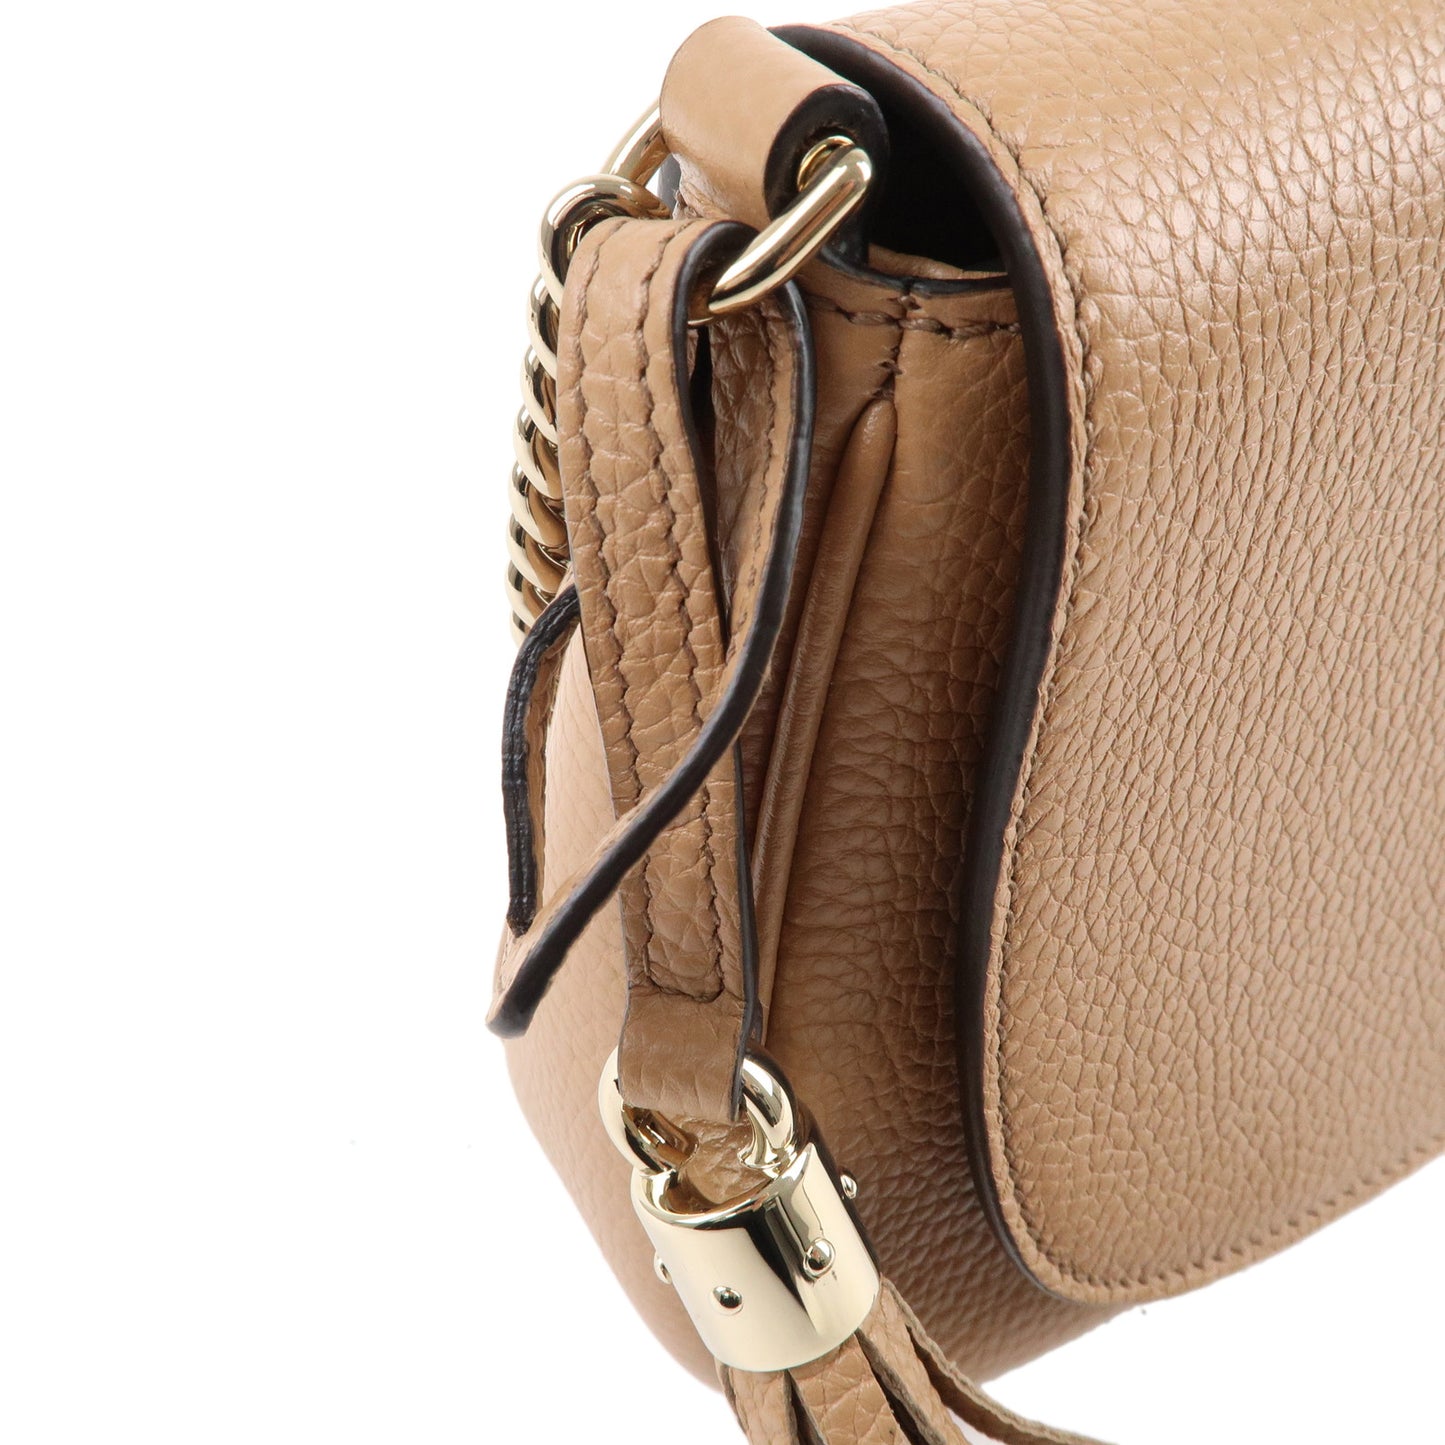 GUCCI SOHO Leather Chain Shoulder Bag Crossbody Bag Beige 536224